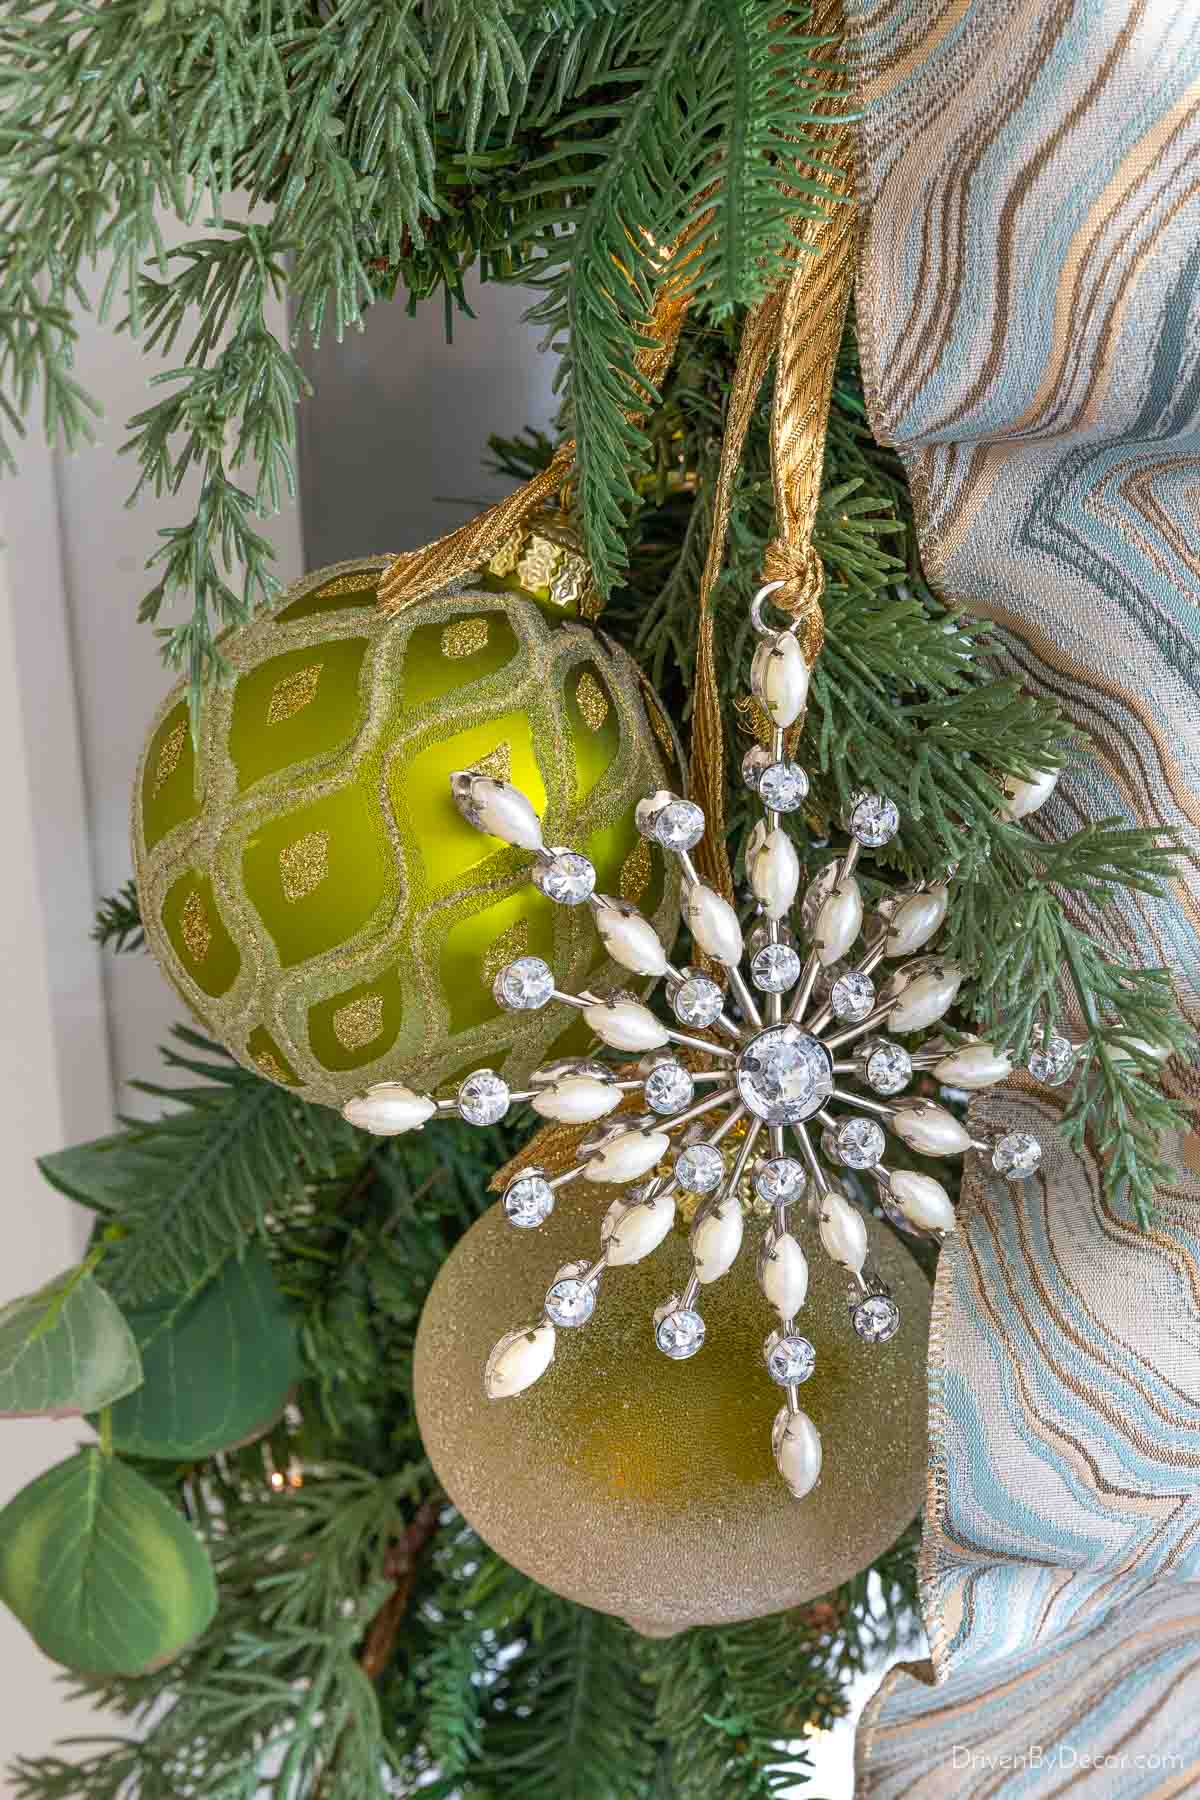 Snowflake and ball ornaments hung on garland